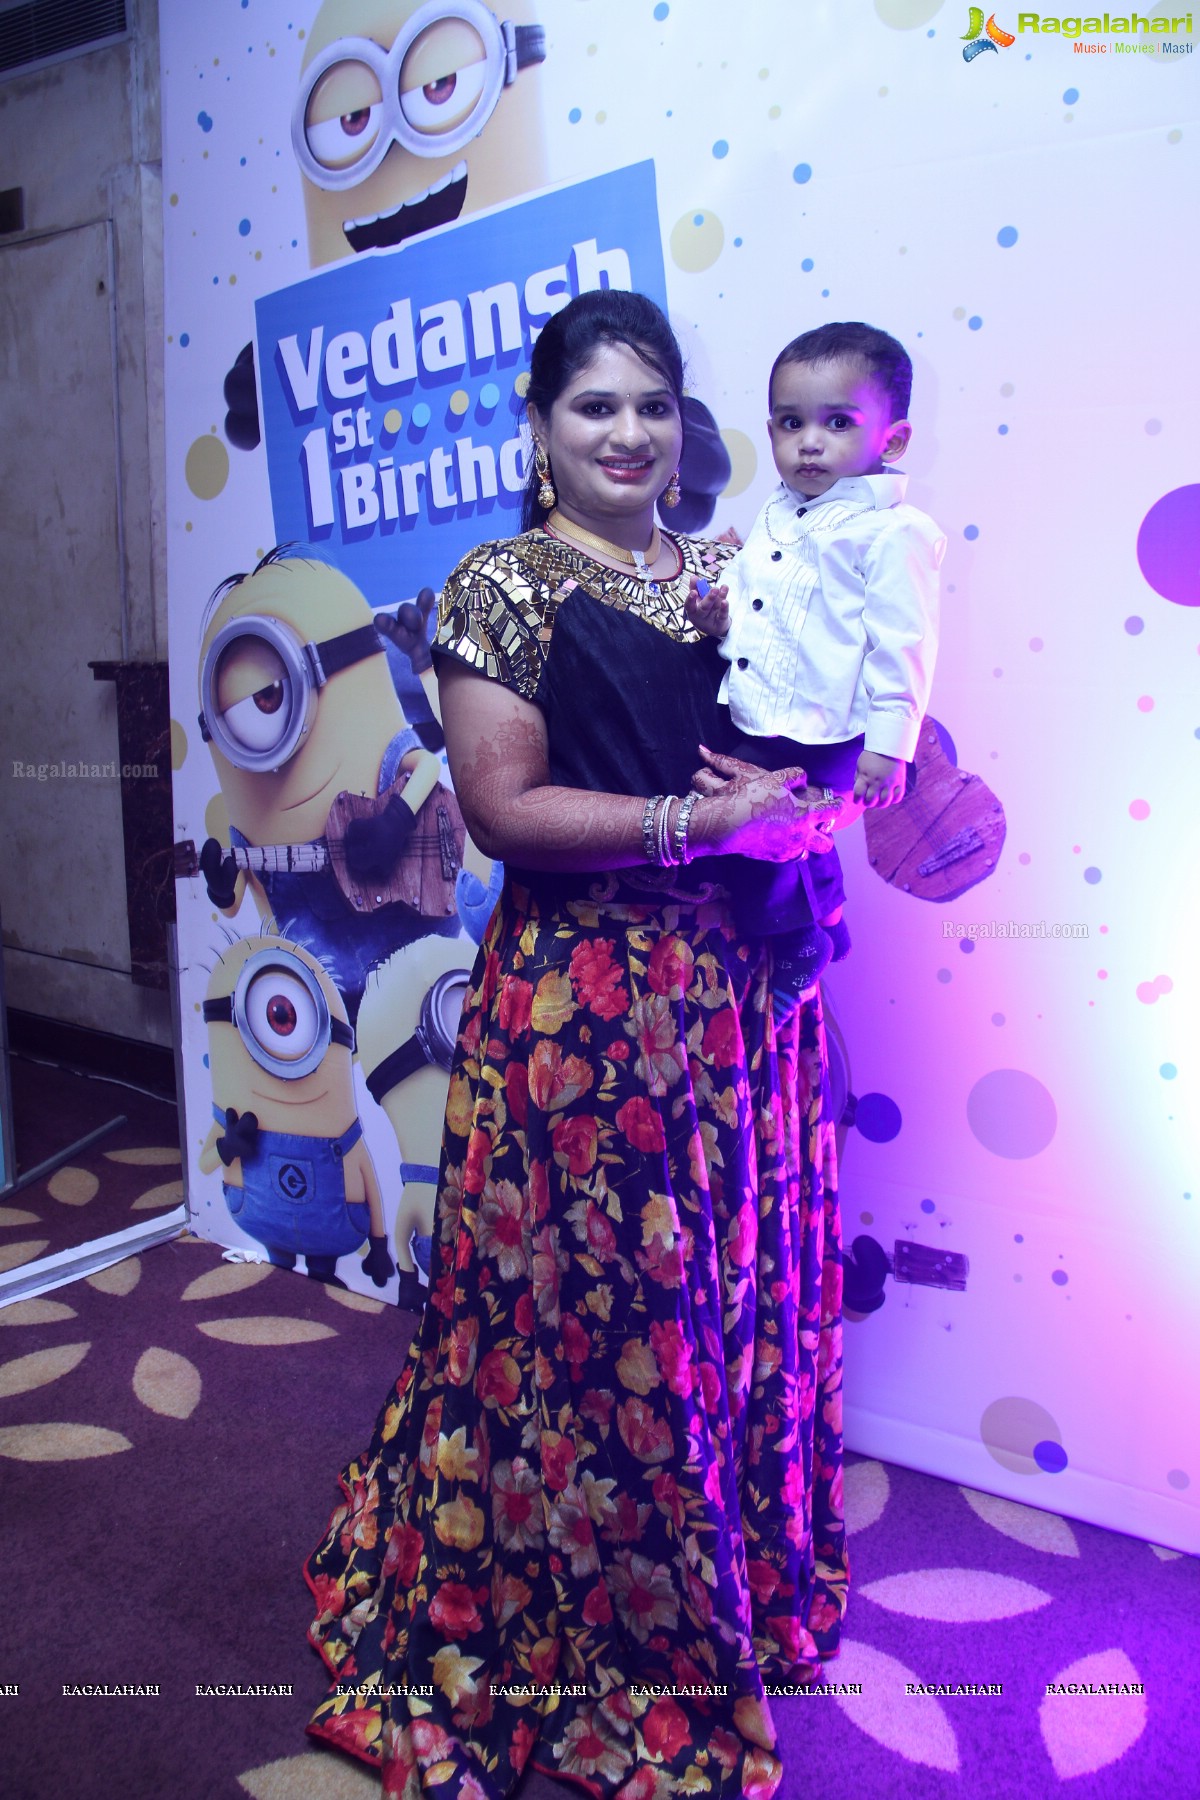 Vedansh 1st Birthday Celebrations at The Park, Hyderabad